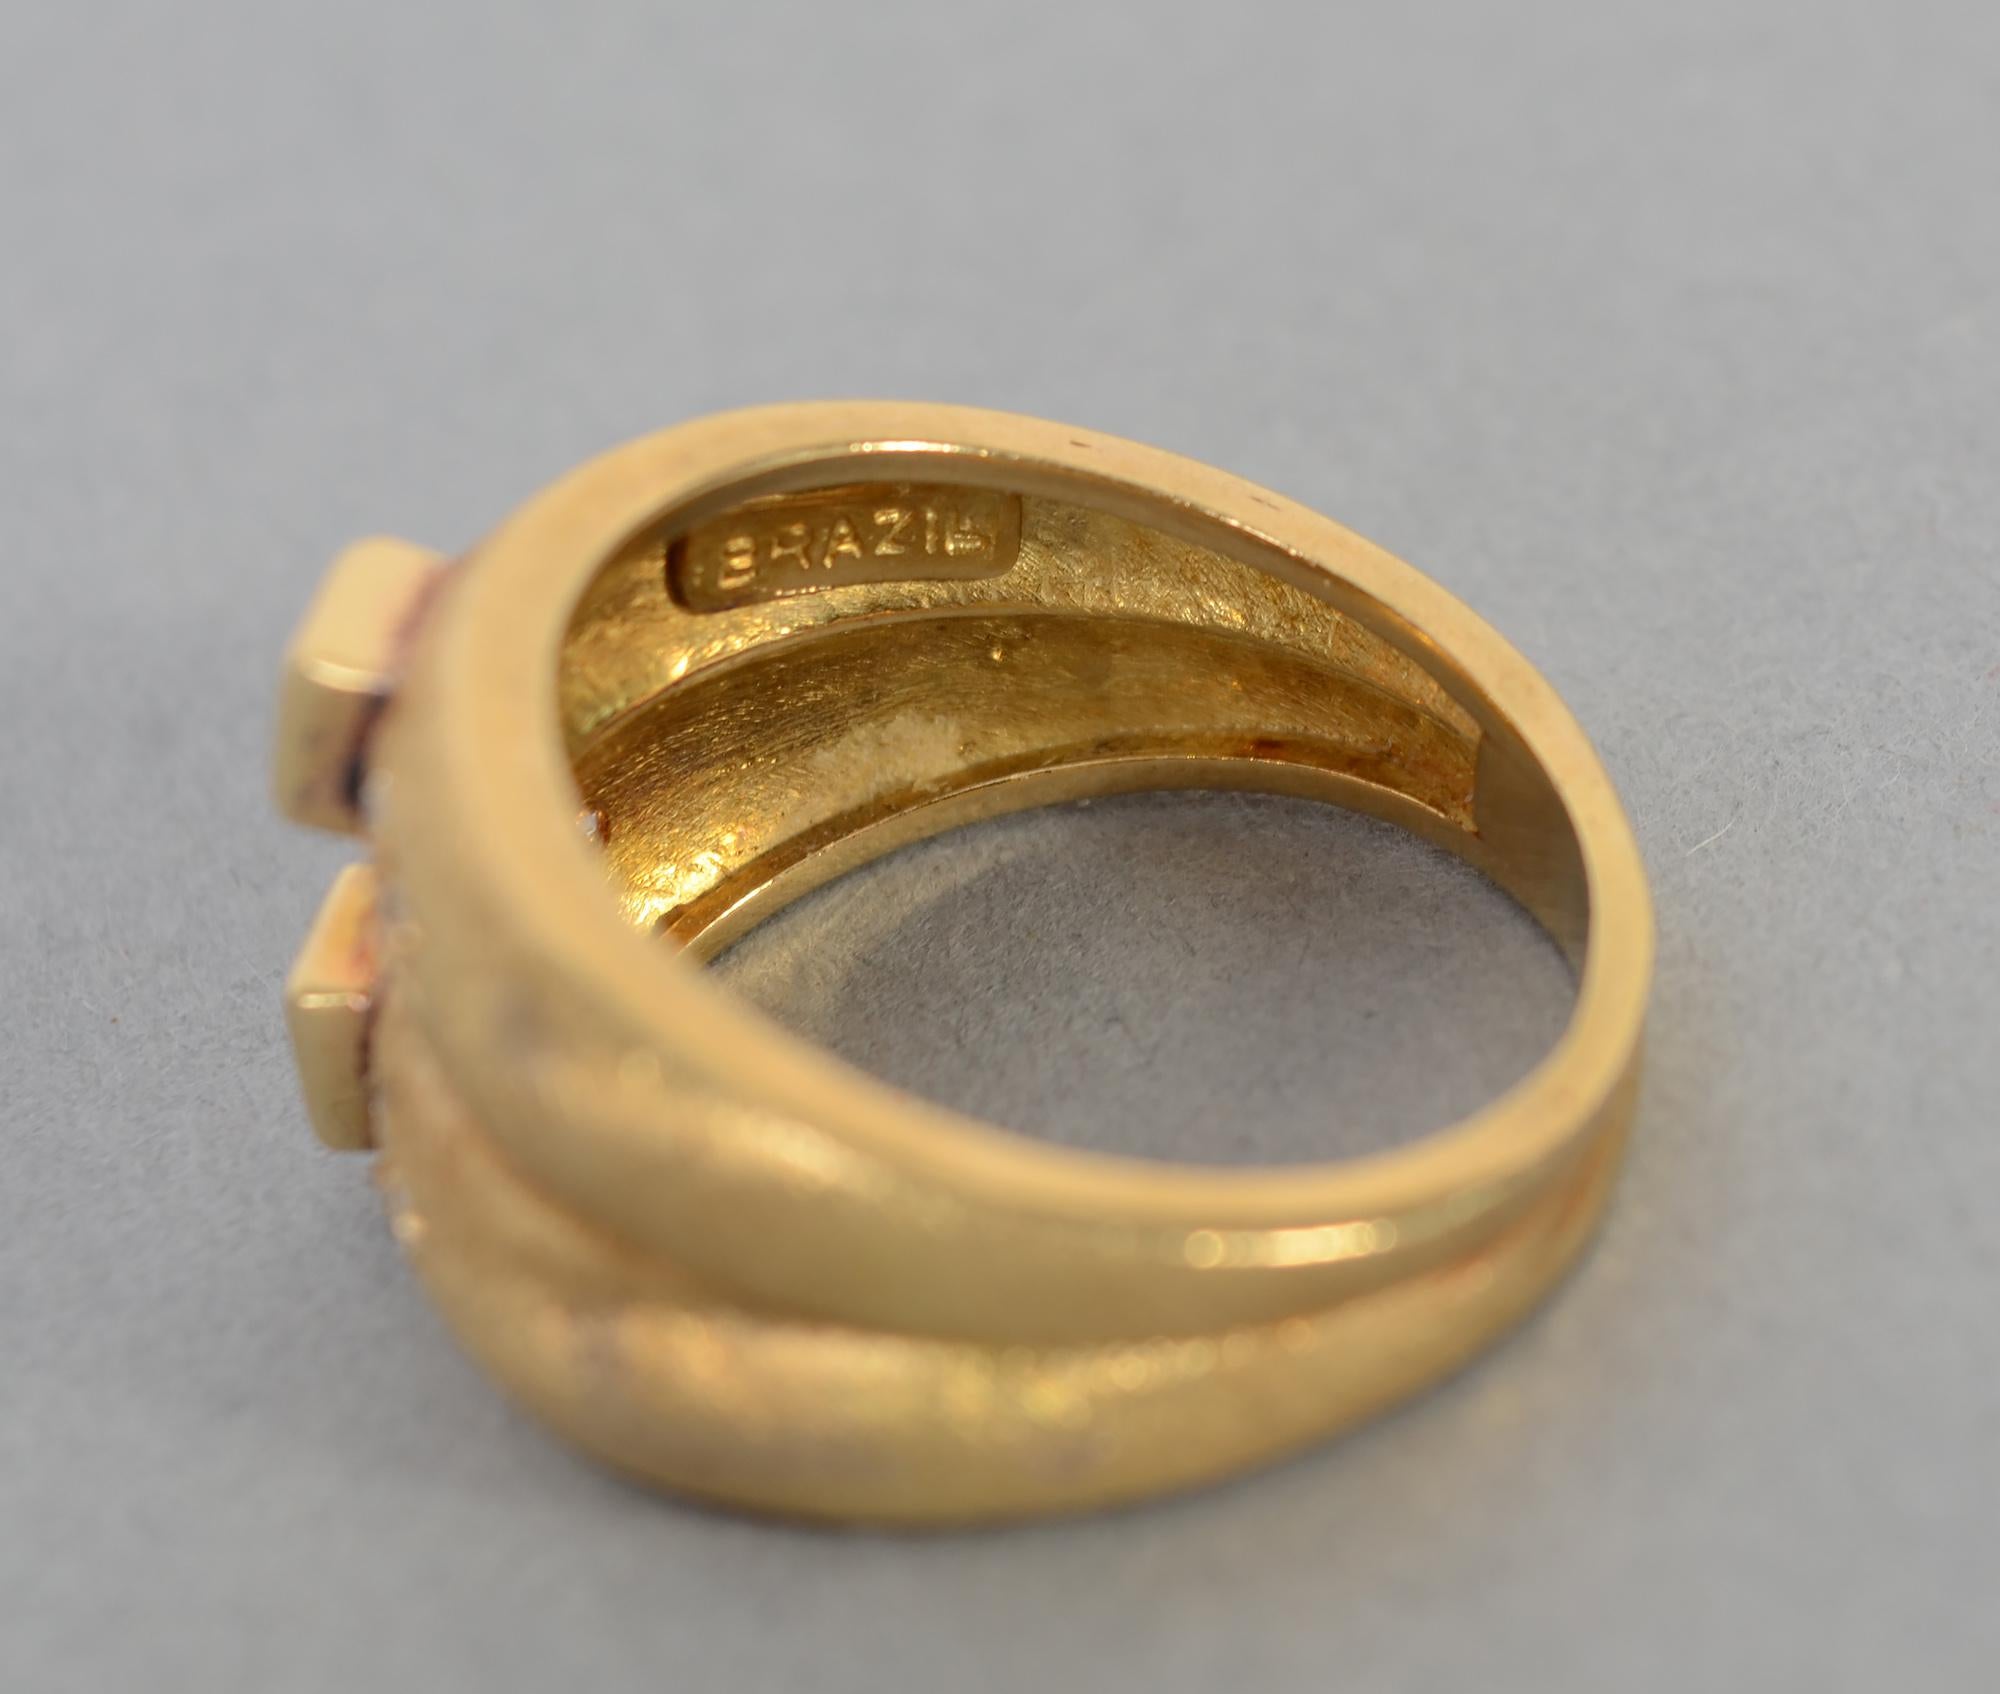 burle marx gold ring